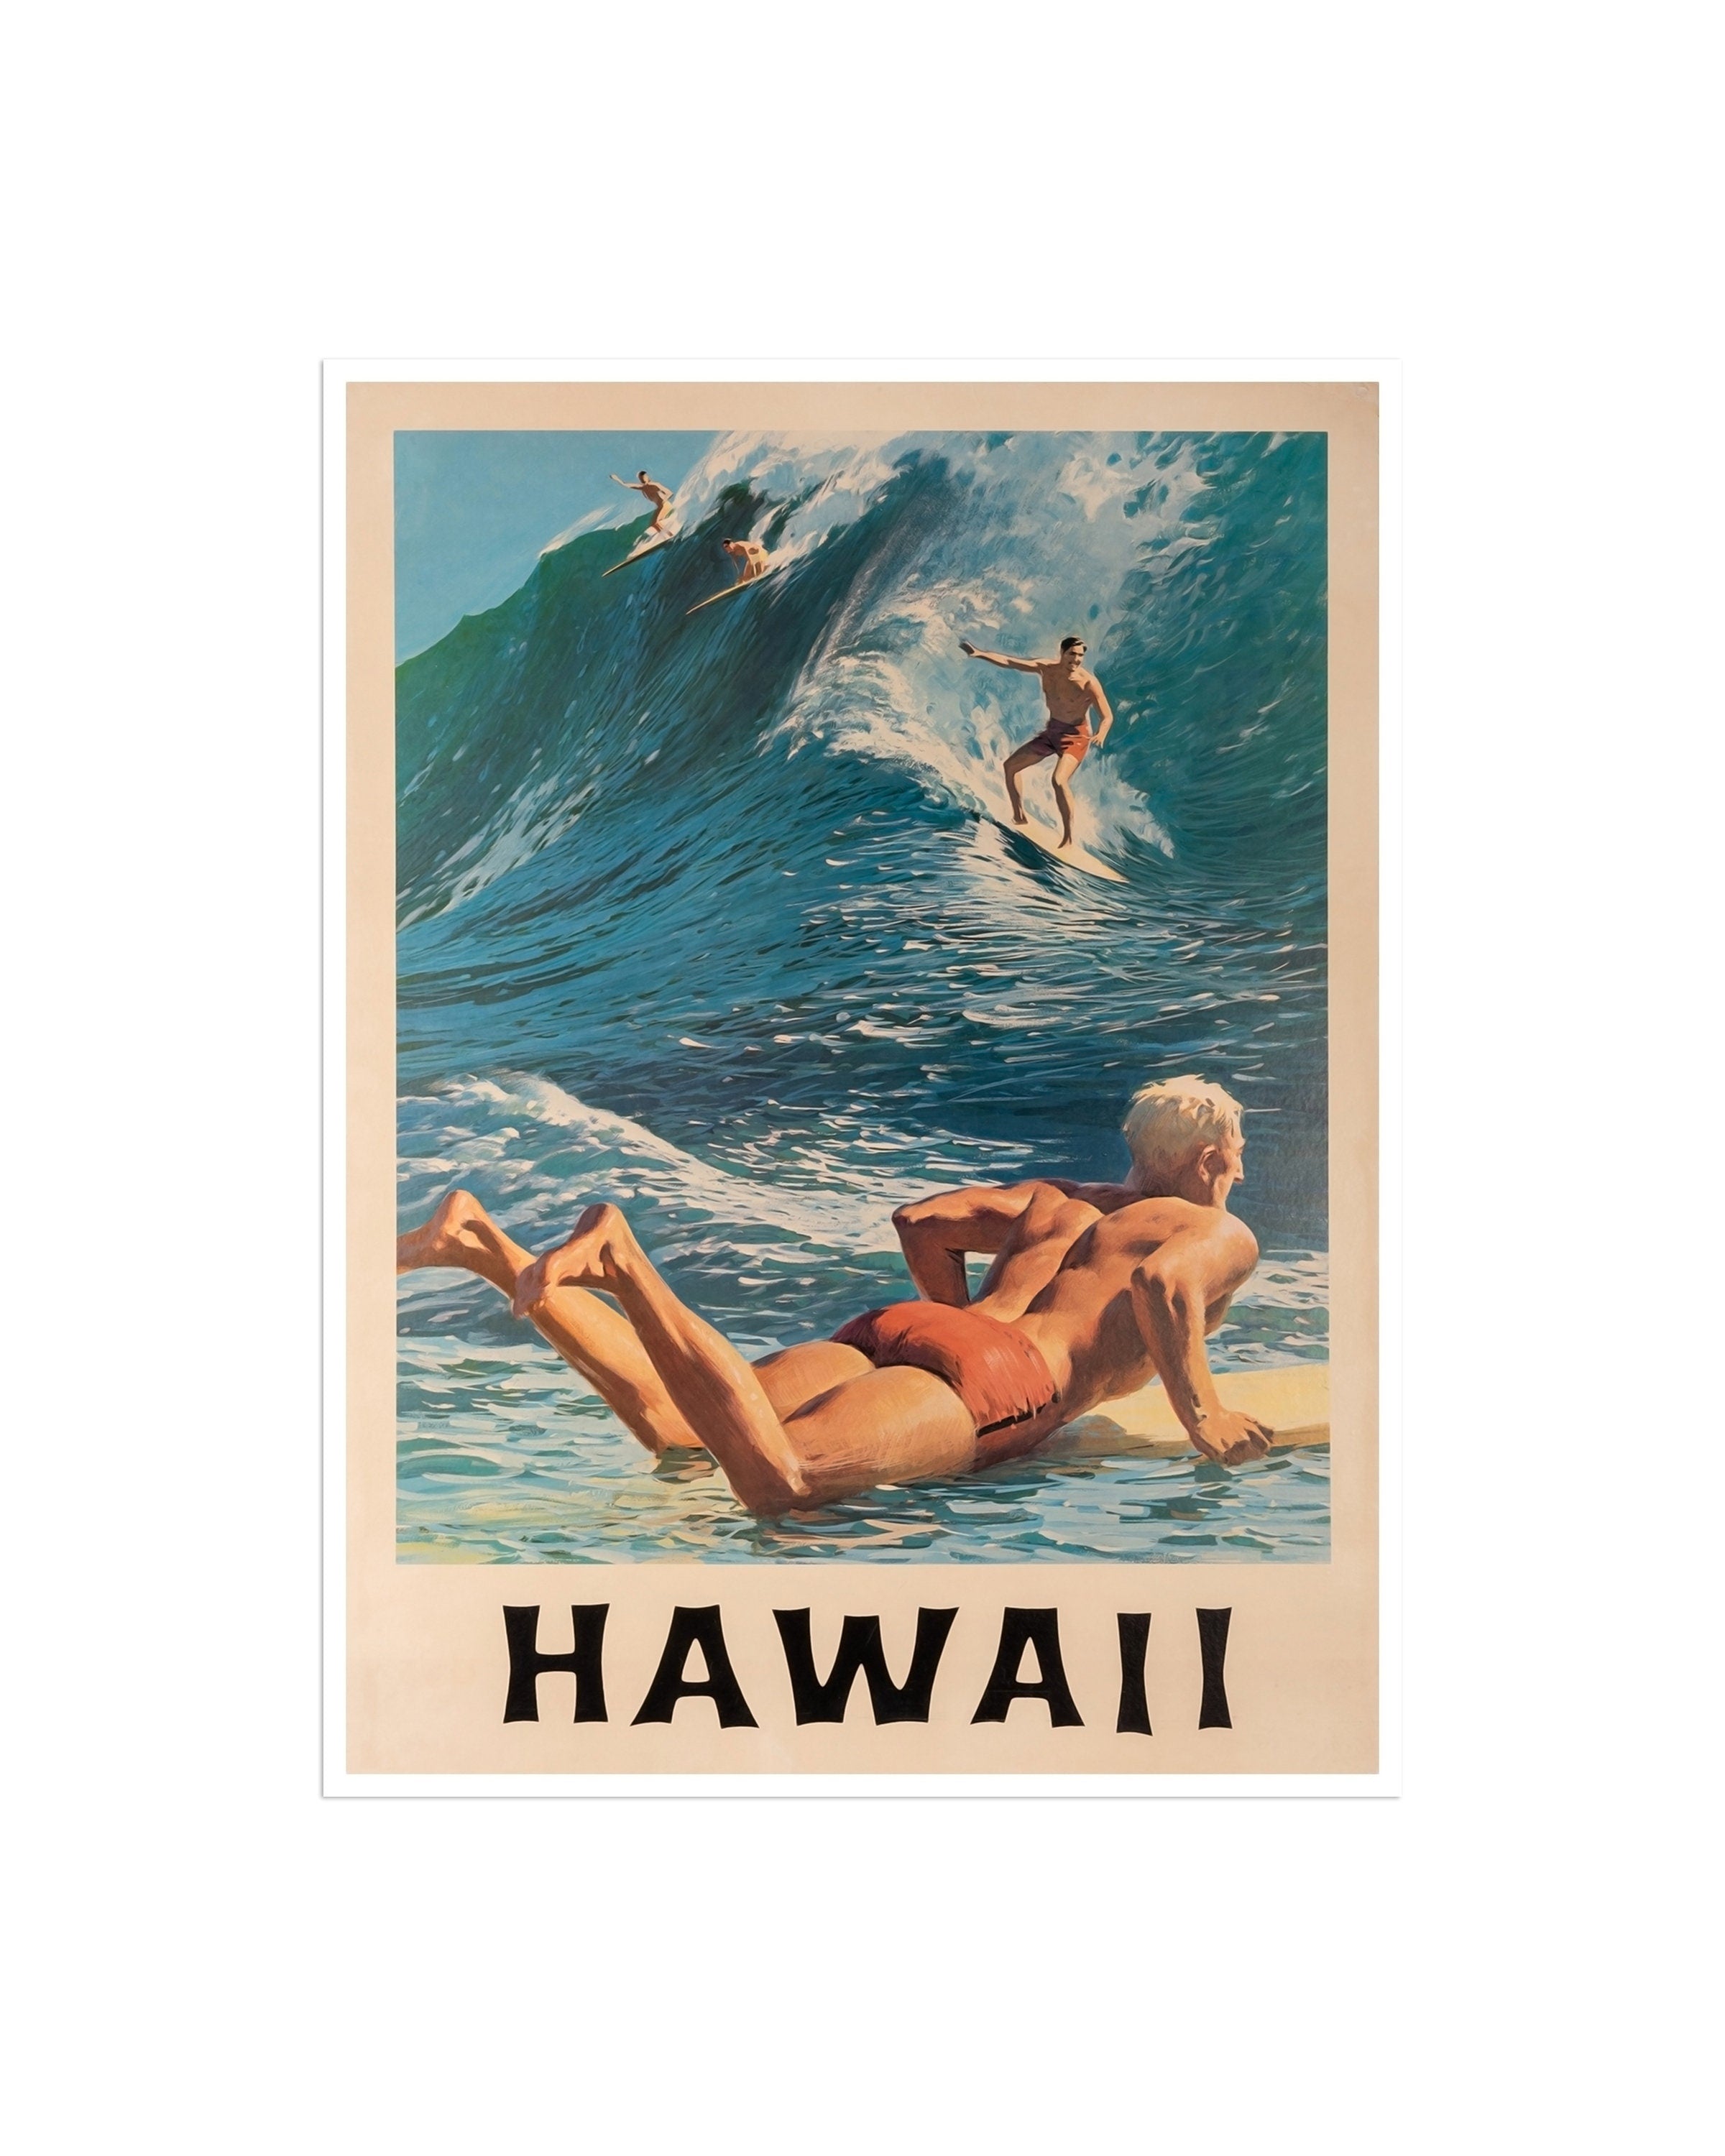 Retro Surfing Art Print Hawaii Travel Poster (XR1794)